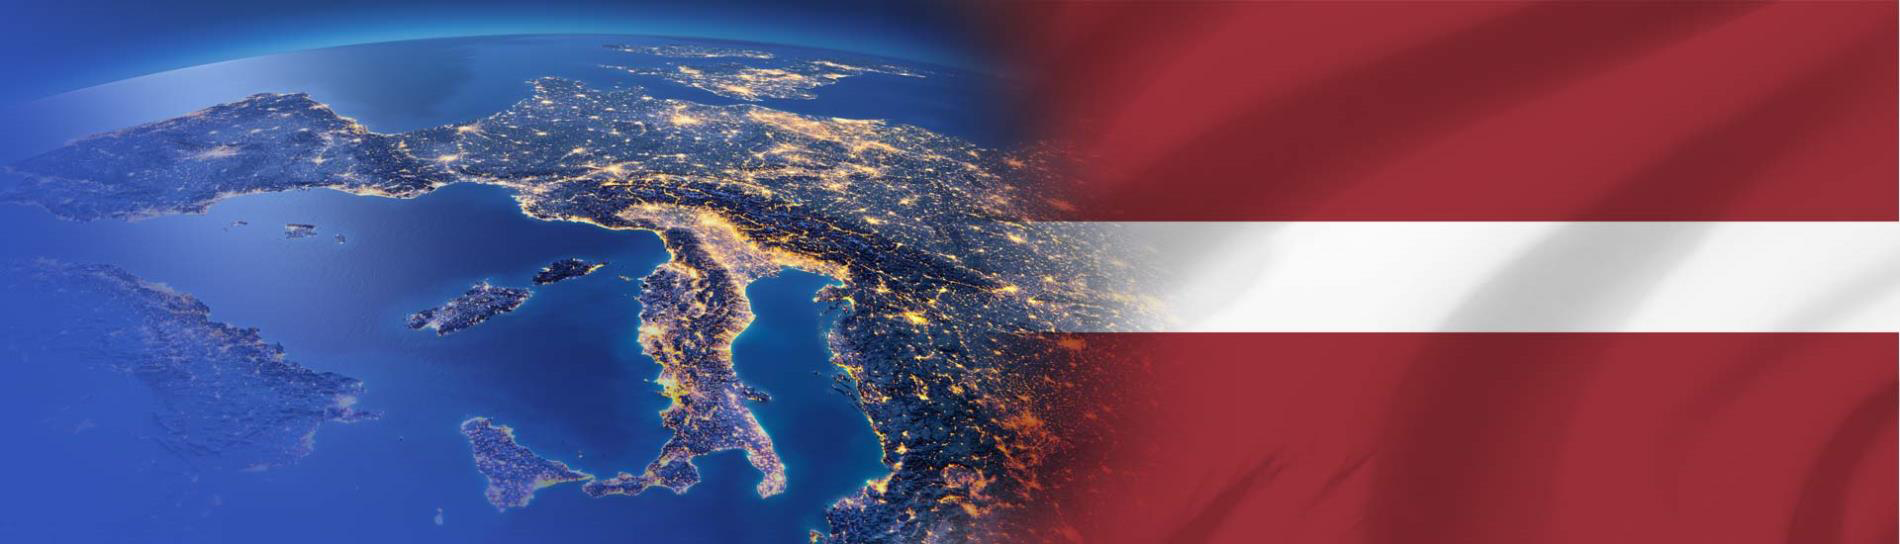 latvijska zastava na kontinentu Europe